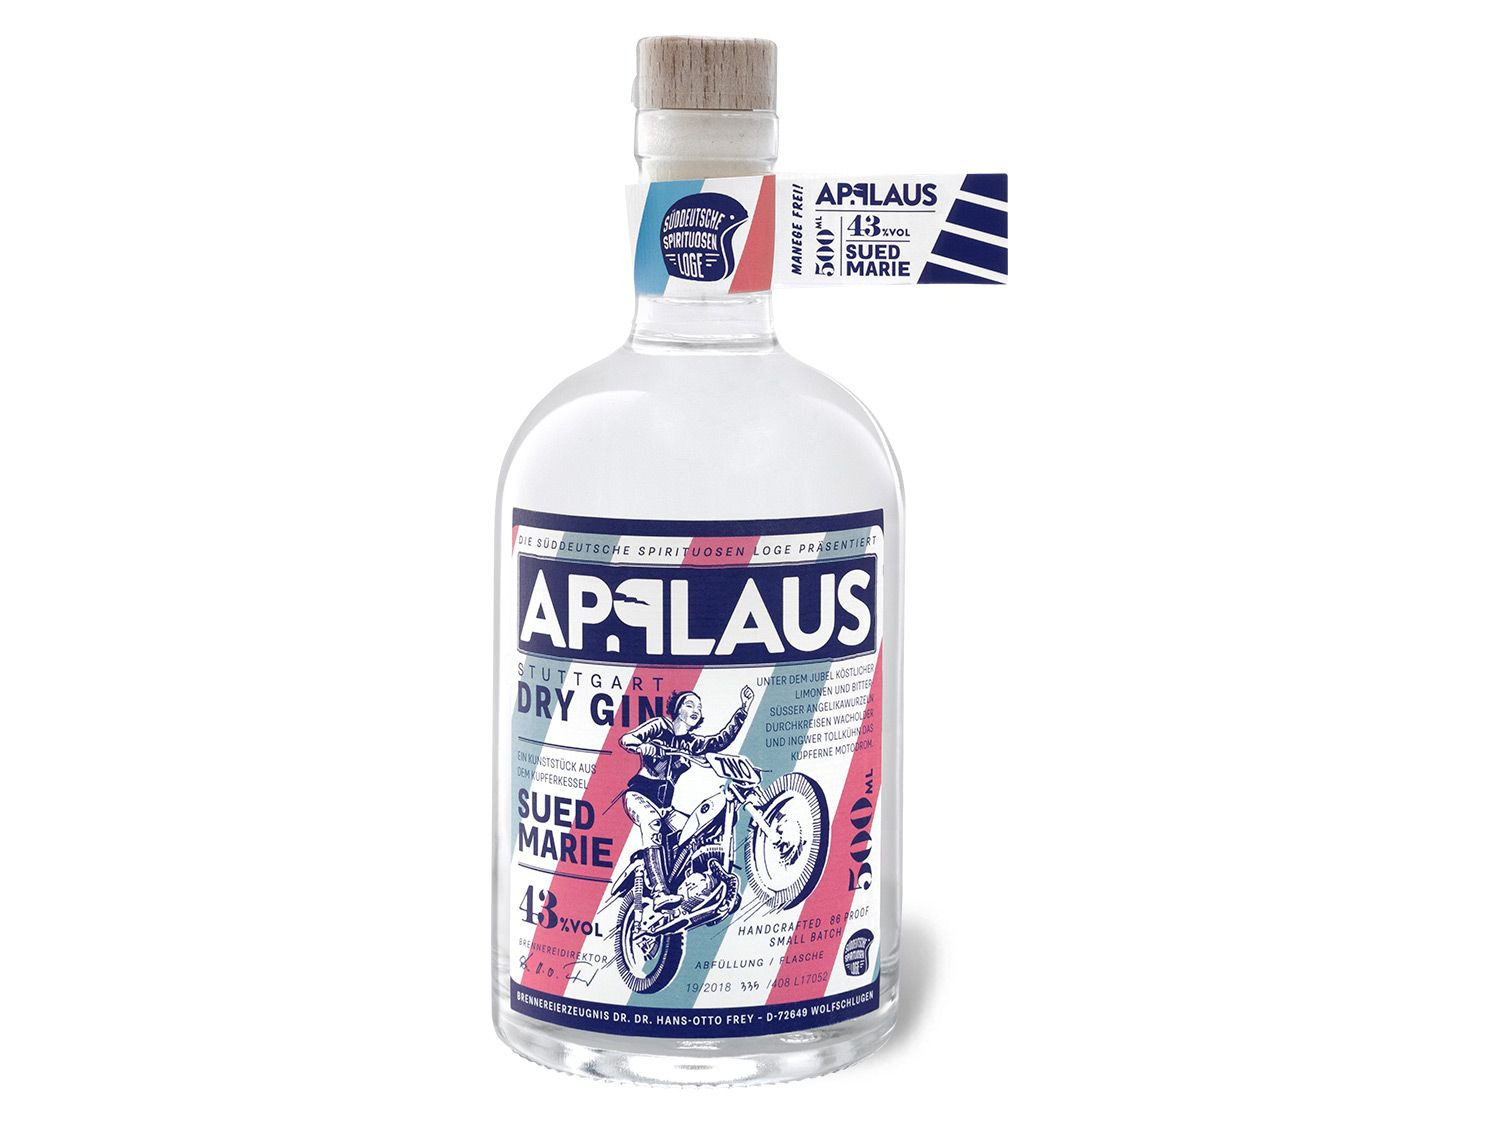 Applaus Dry Gin Suedmarie 43% Vol online kaufen | LIDL